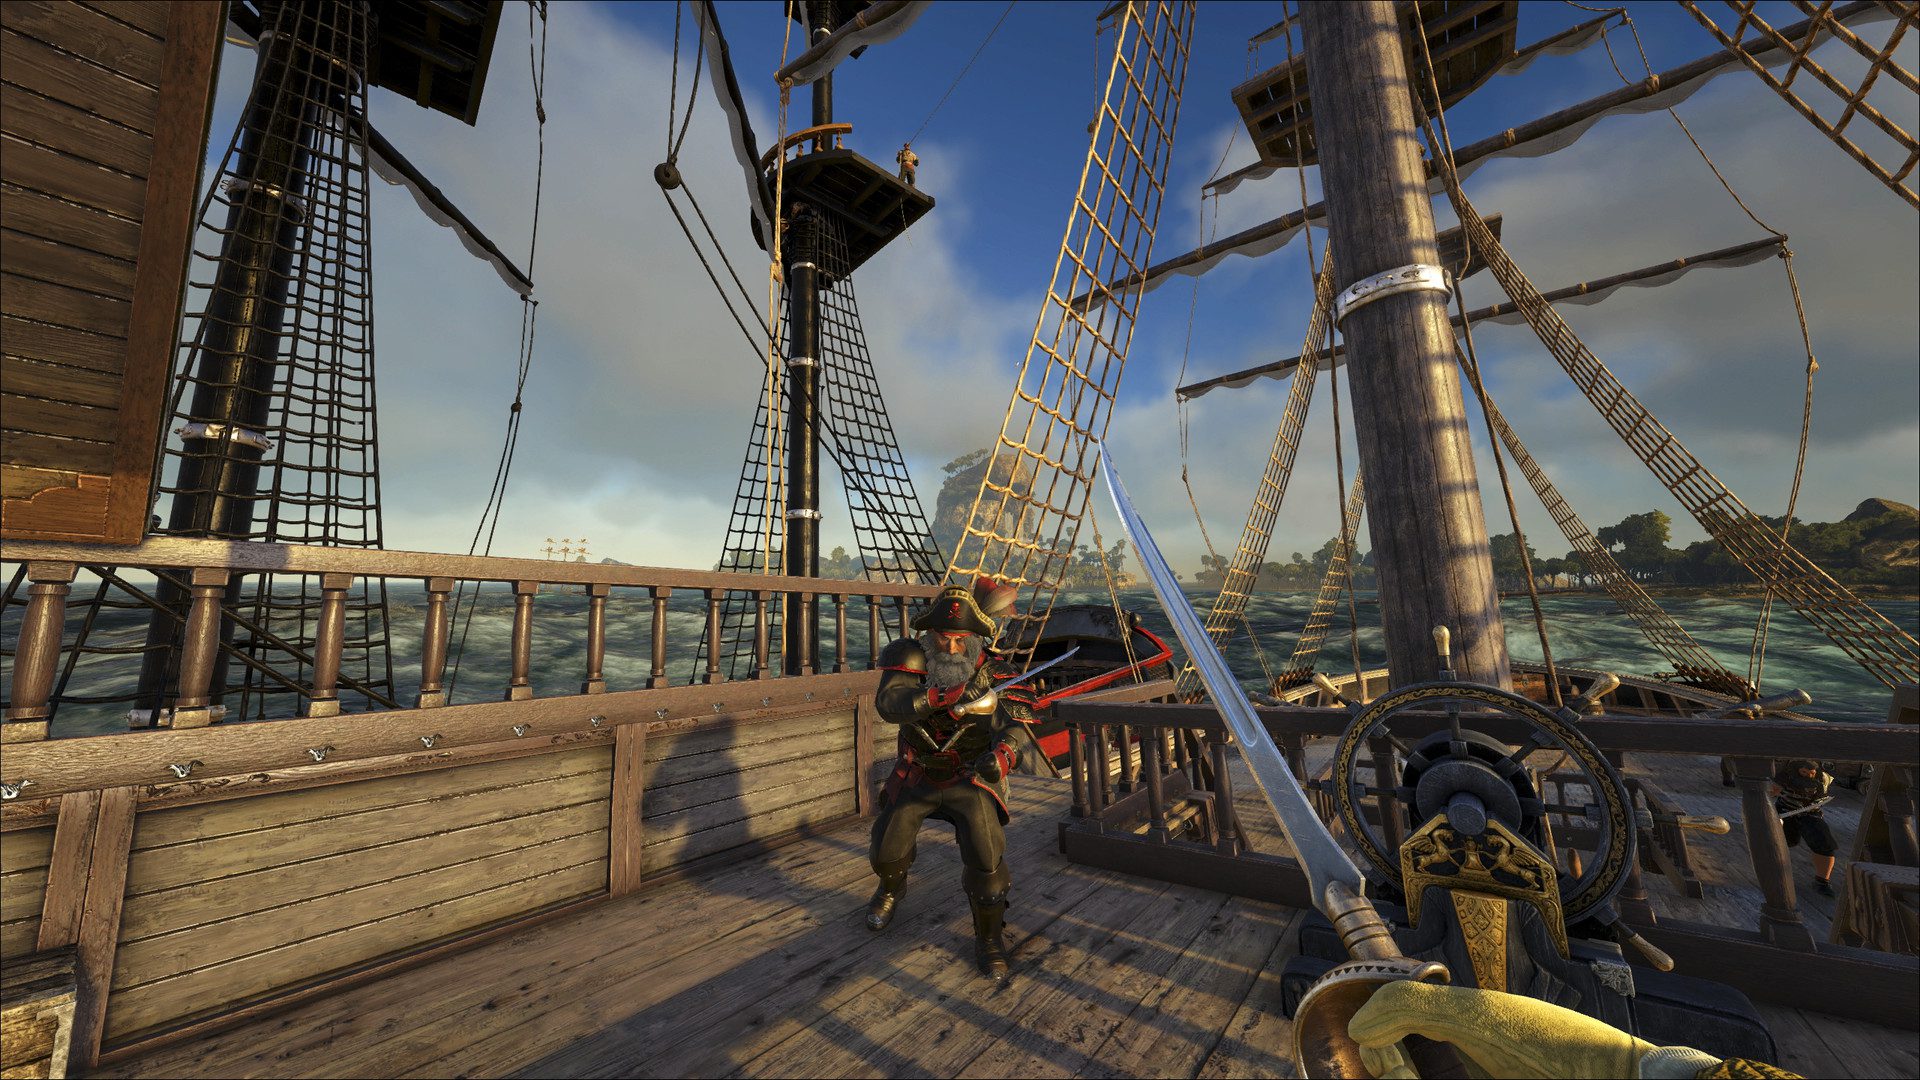 Pirate MMO ATLAS sets sail next week